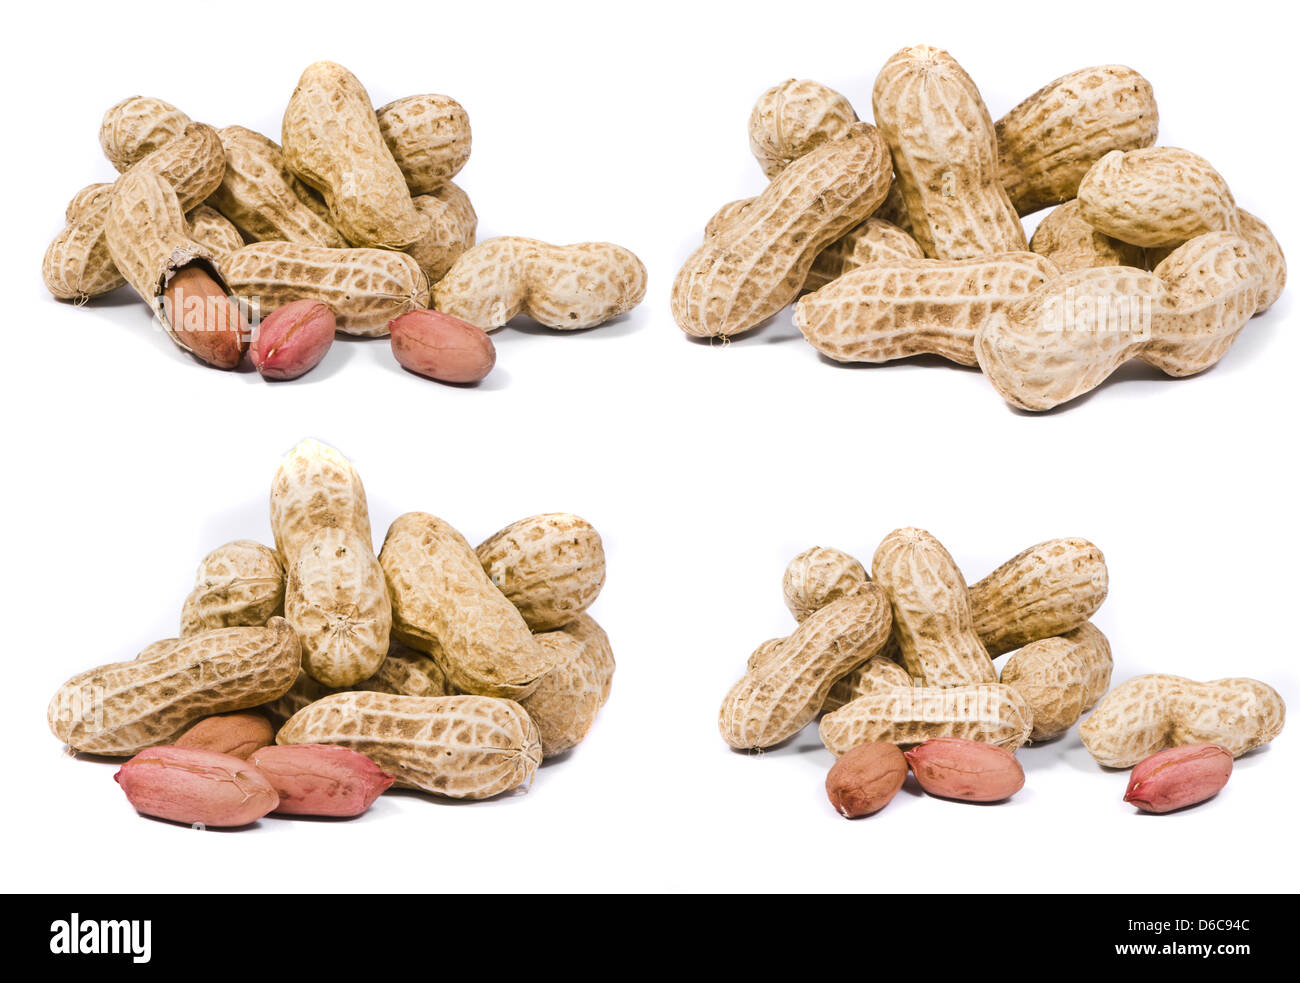 Peanuts macro shots, isoliated on white Stock Photo